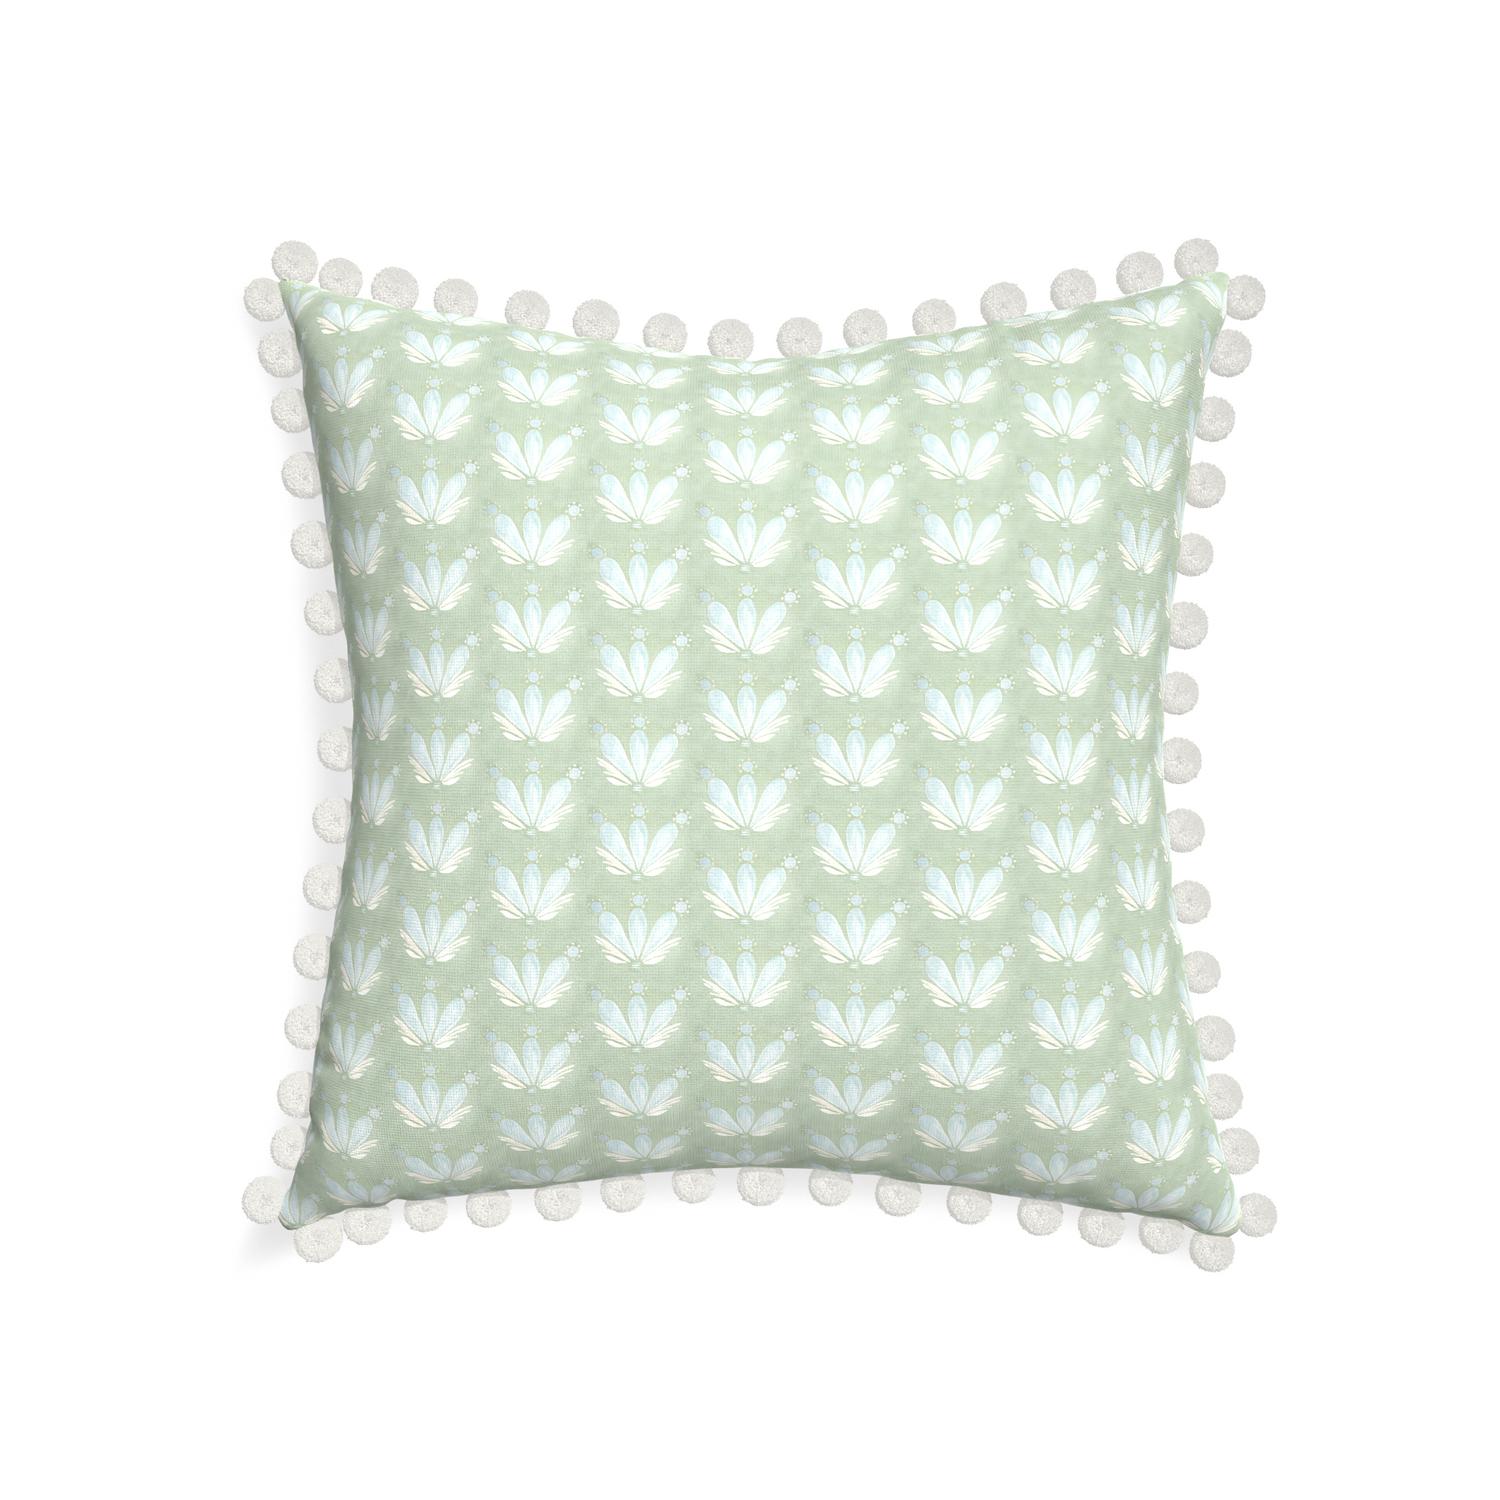 22-square serena sea salt custom pillow with snow pom pom on white background